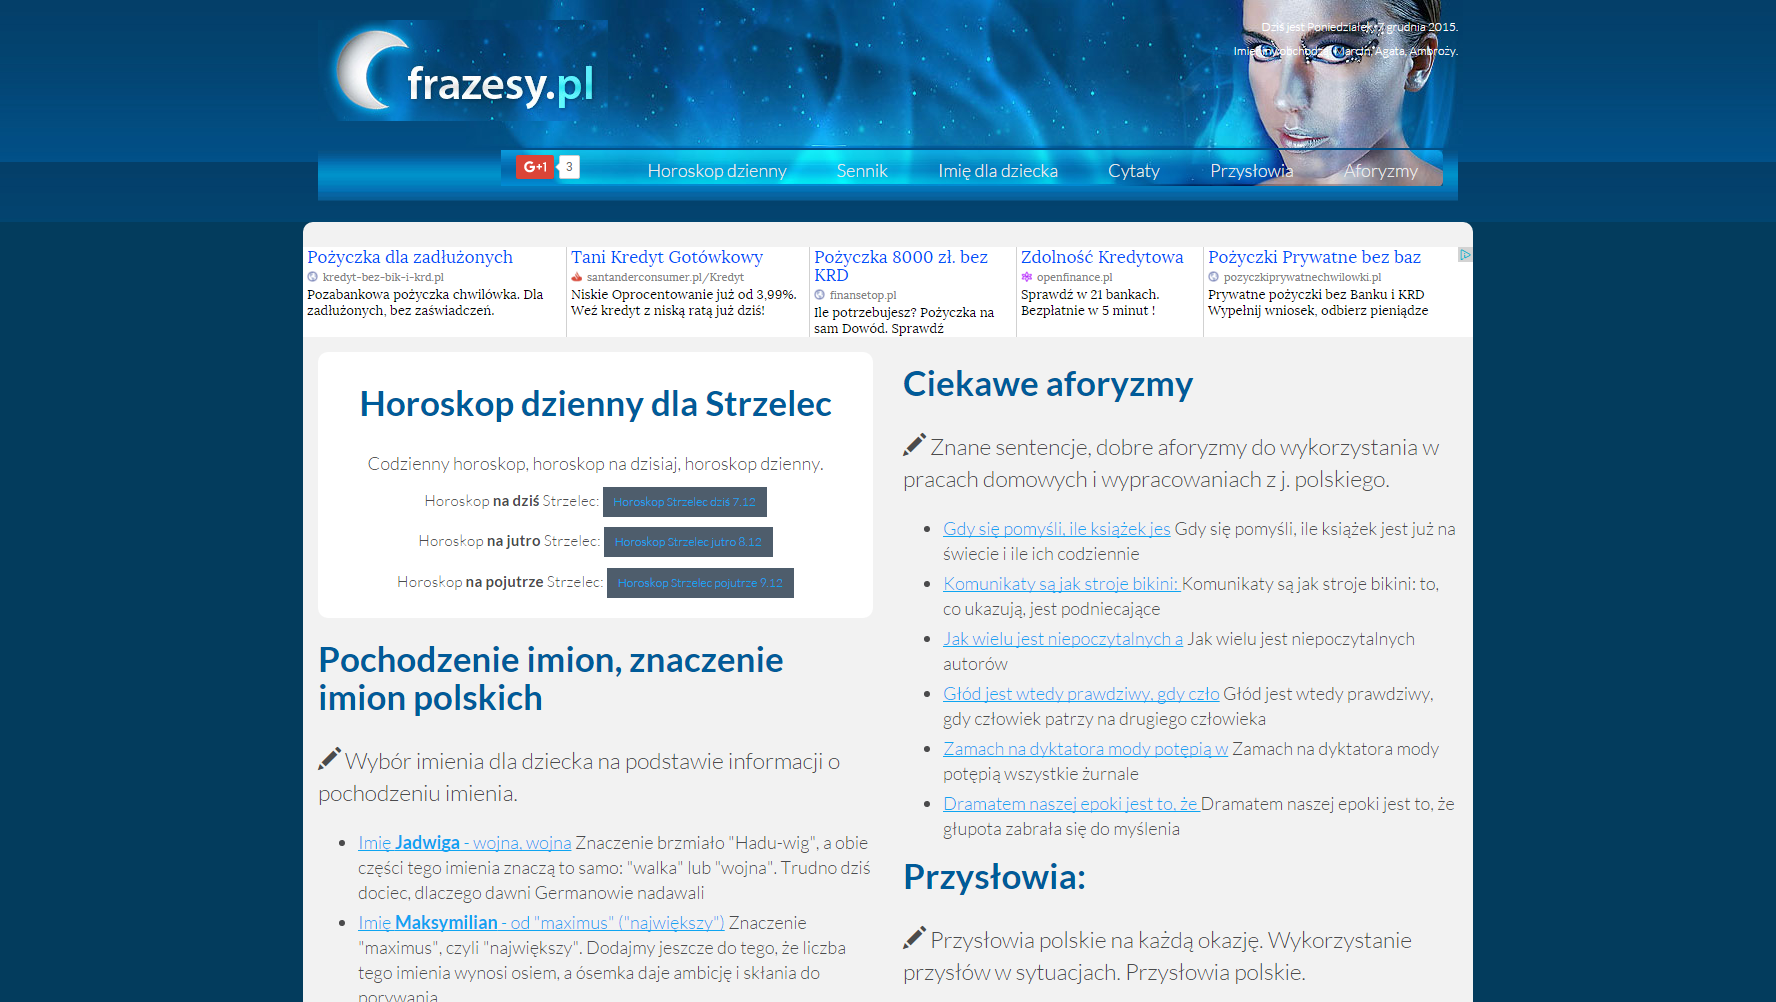 Proyecto Frazesy.pl